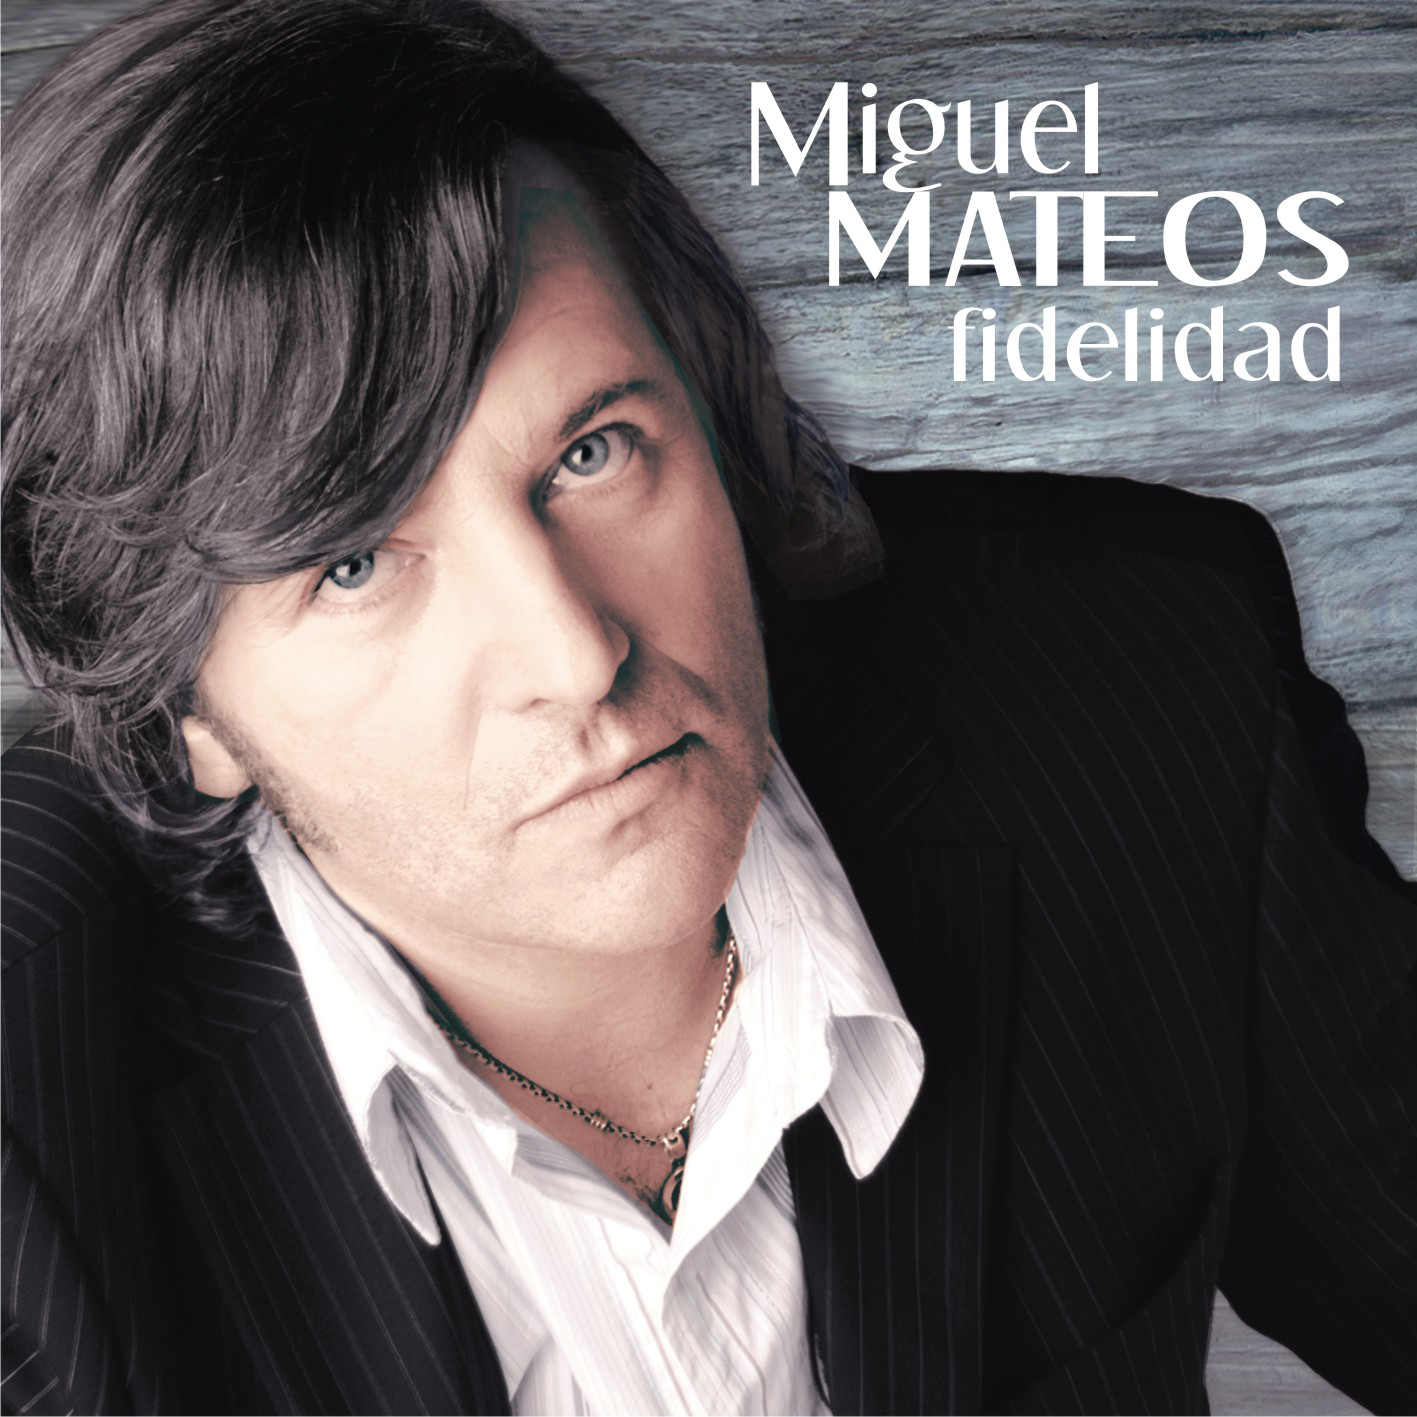 Miguel Mateos México